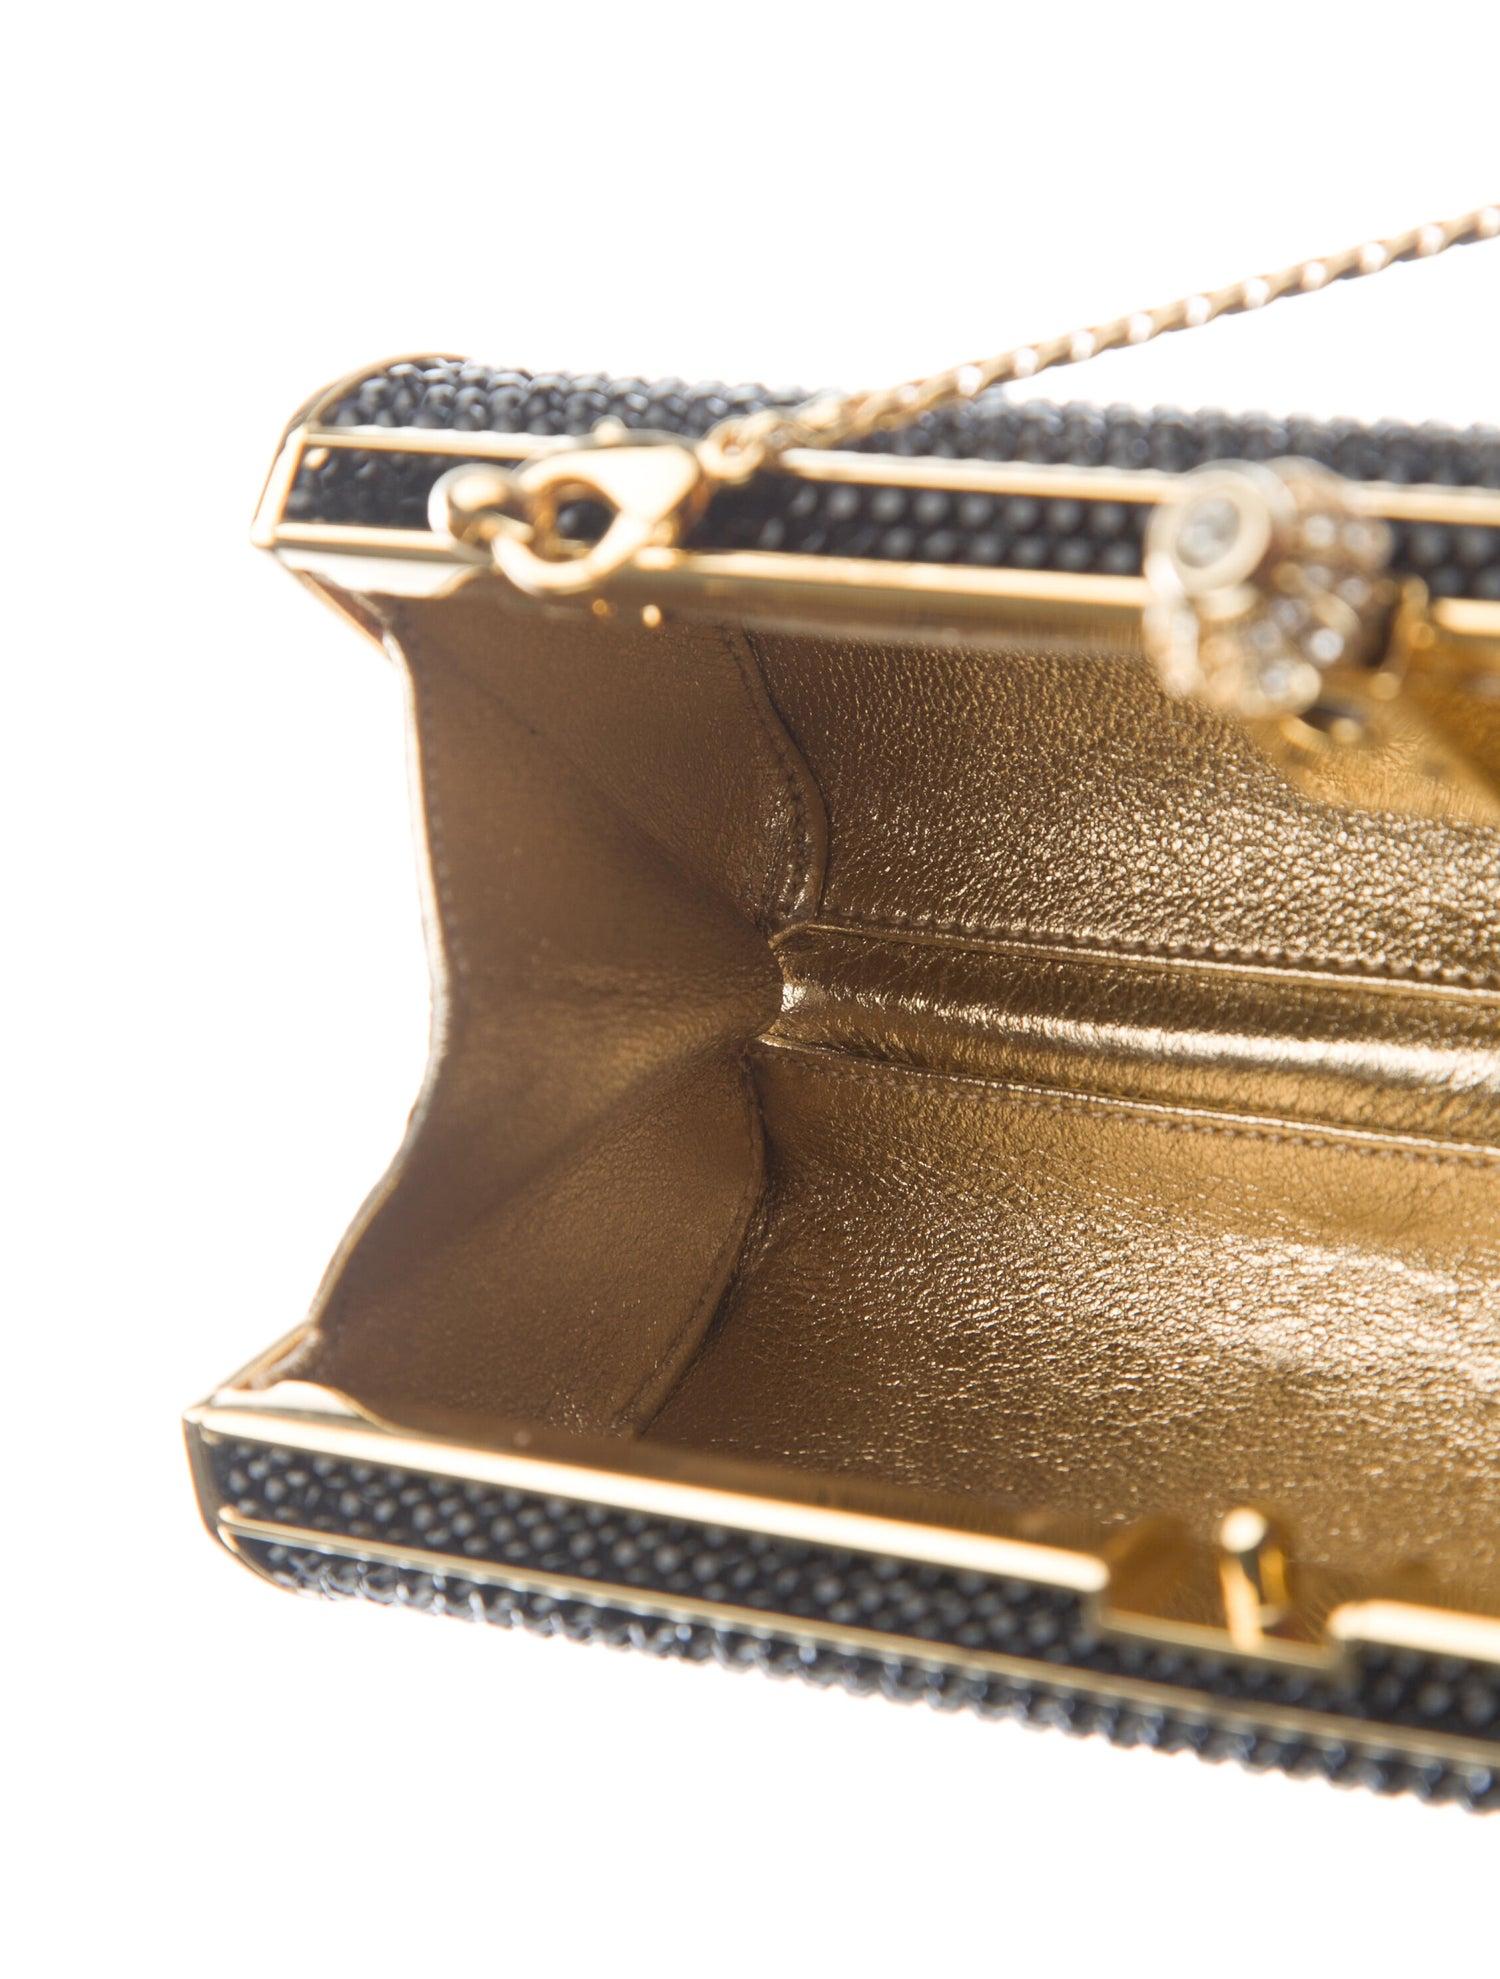 Judith Leiber NEW Black Gold Crystal Evening Box Clutch Shoulder Bag in Box 1